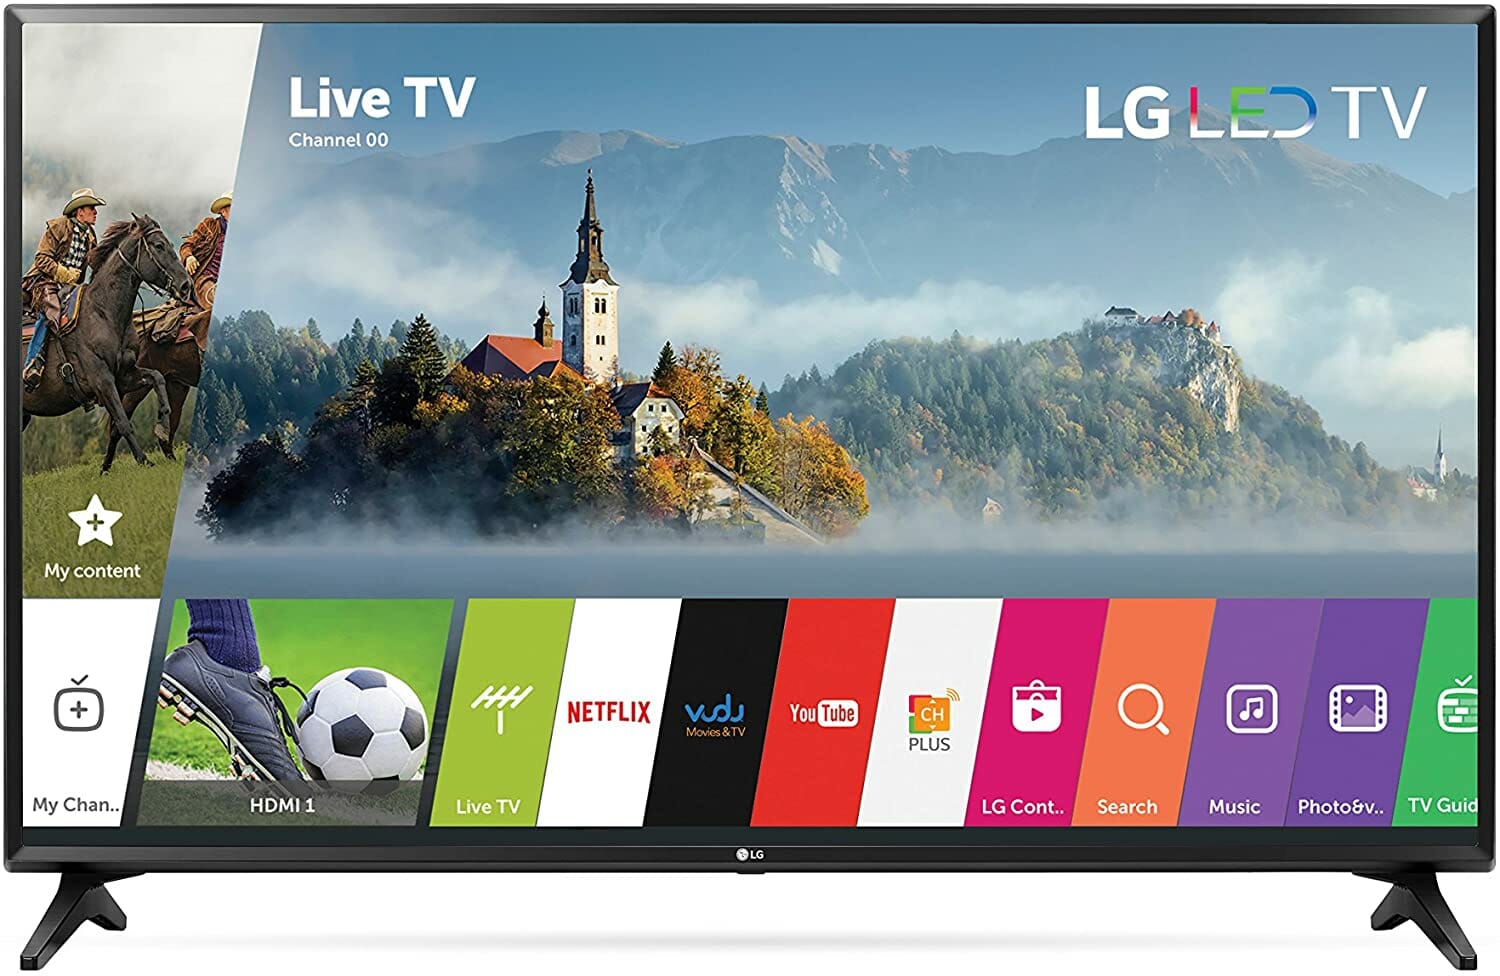 LG Electronics 43LJ5500 43-Inch 1080p Smart LED TV